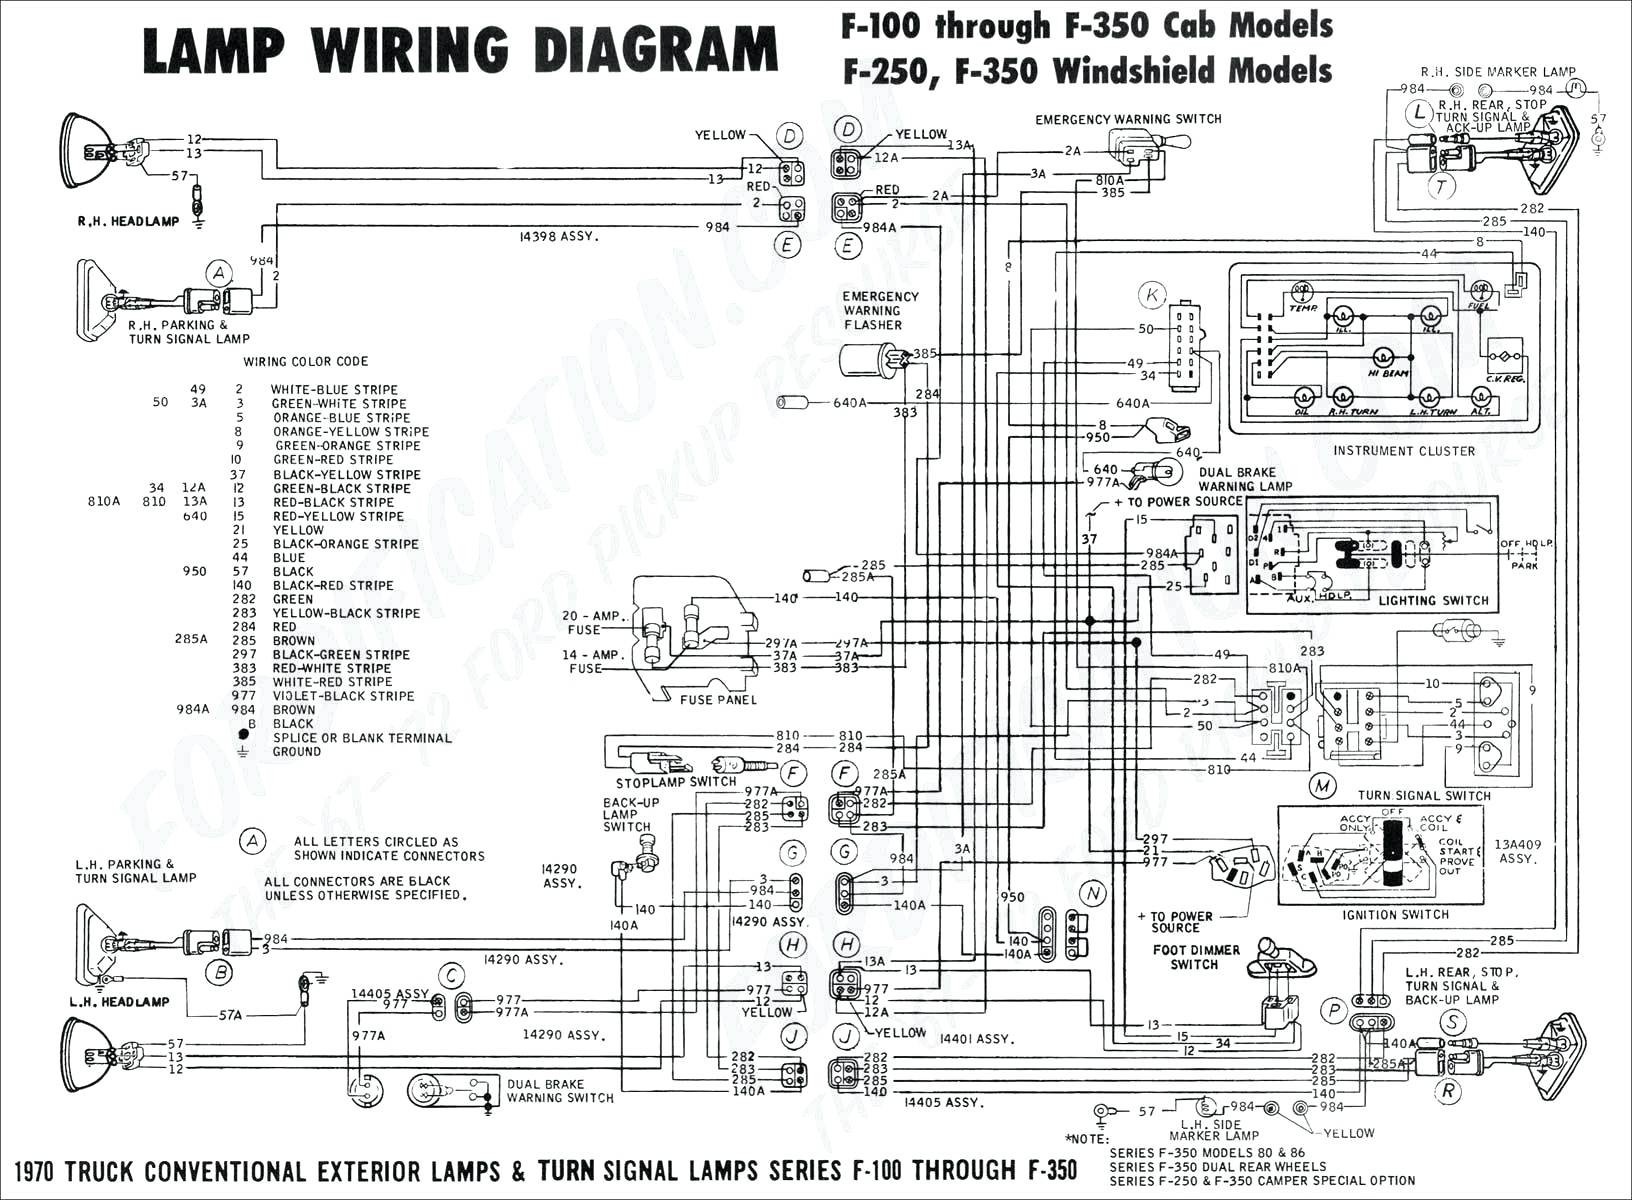 2004 Chrysler Sebring Engine Diagram 2004 Chrysler Pacifica Wiring Diagram Simple 1997 Blue Bird Wiring Of 2004 Chrysler Sebring Engine Diagram